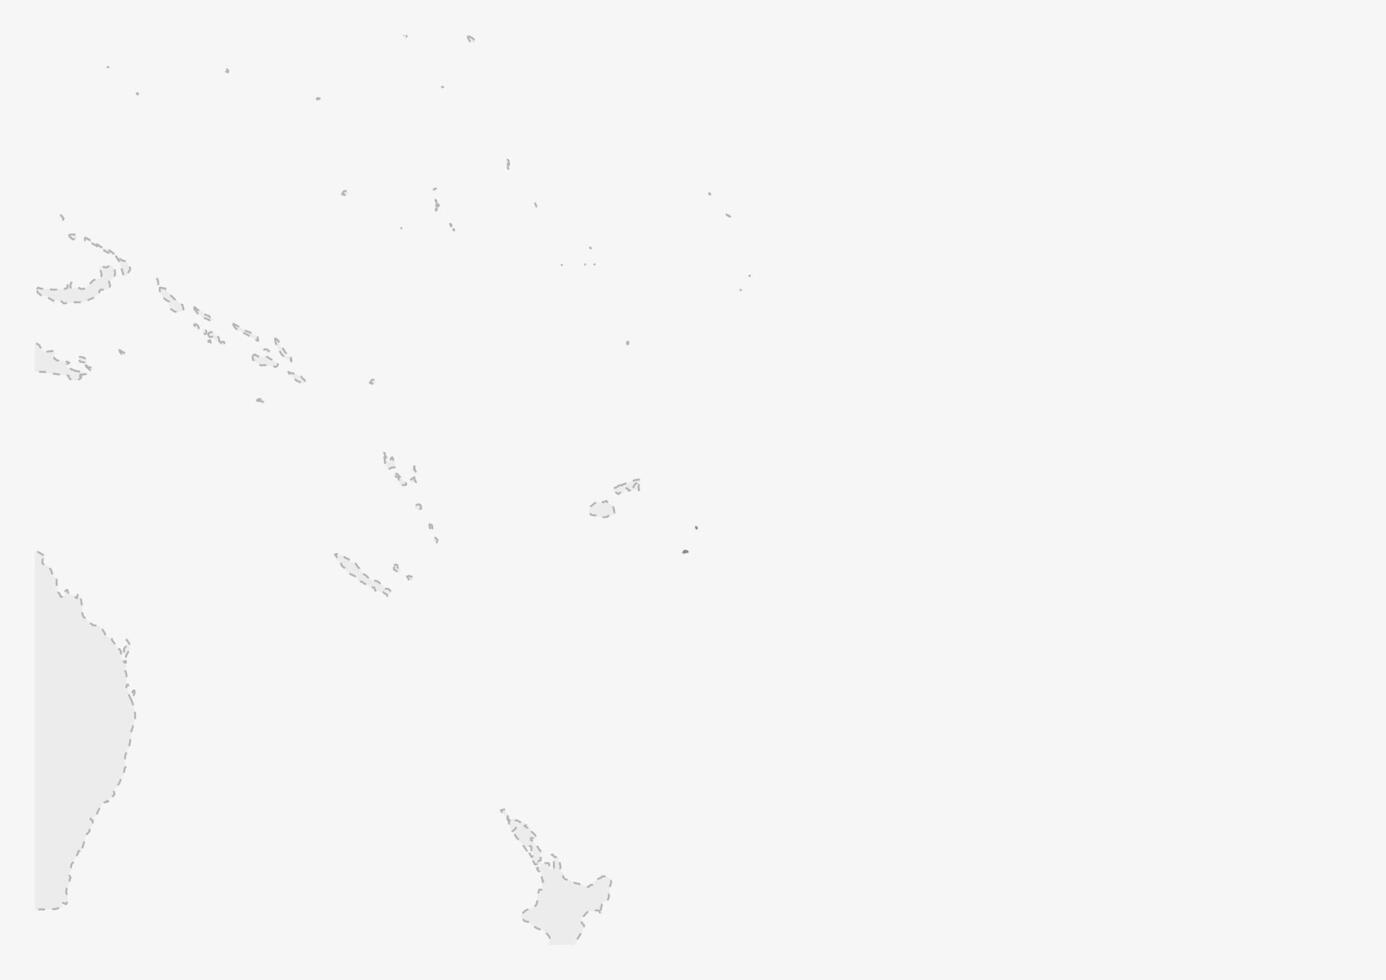 Karte von Ozeanien mit hervorgehoben Tonga Karte vektor